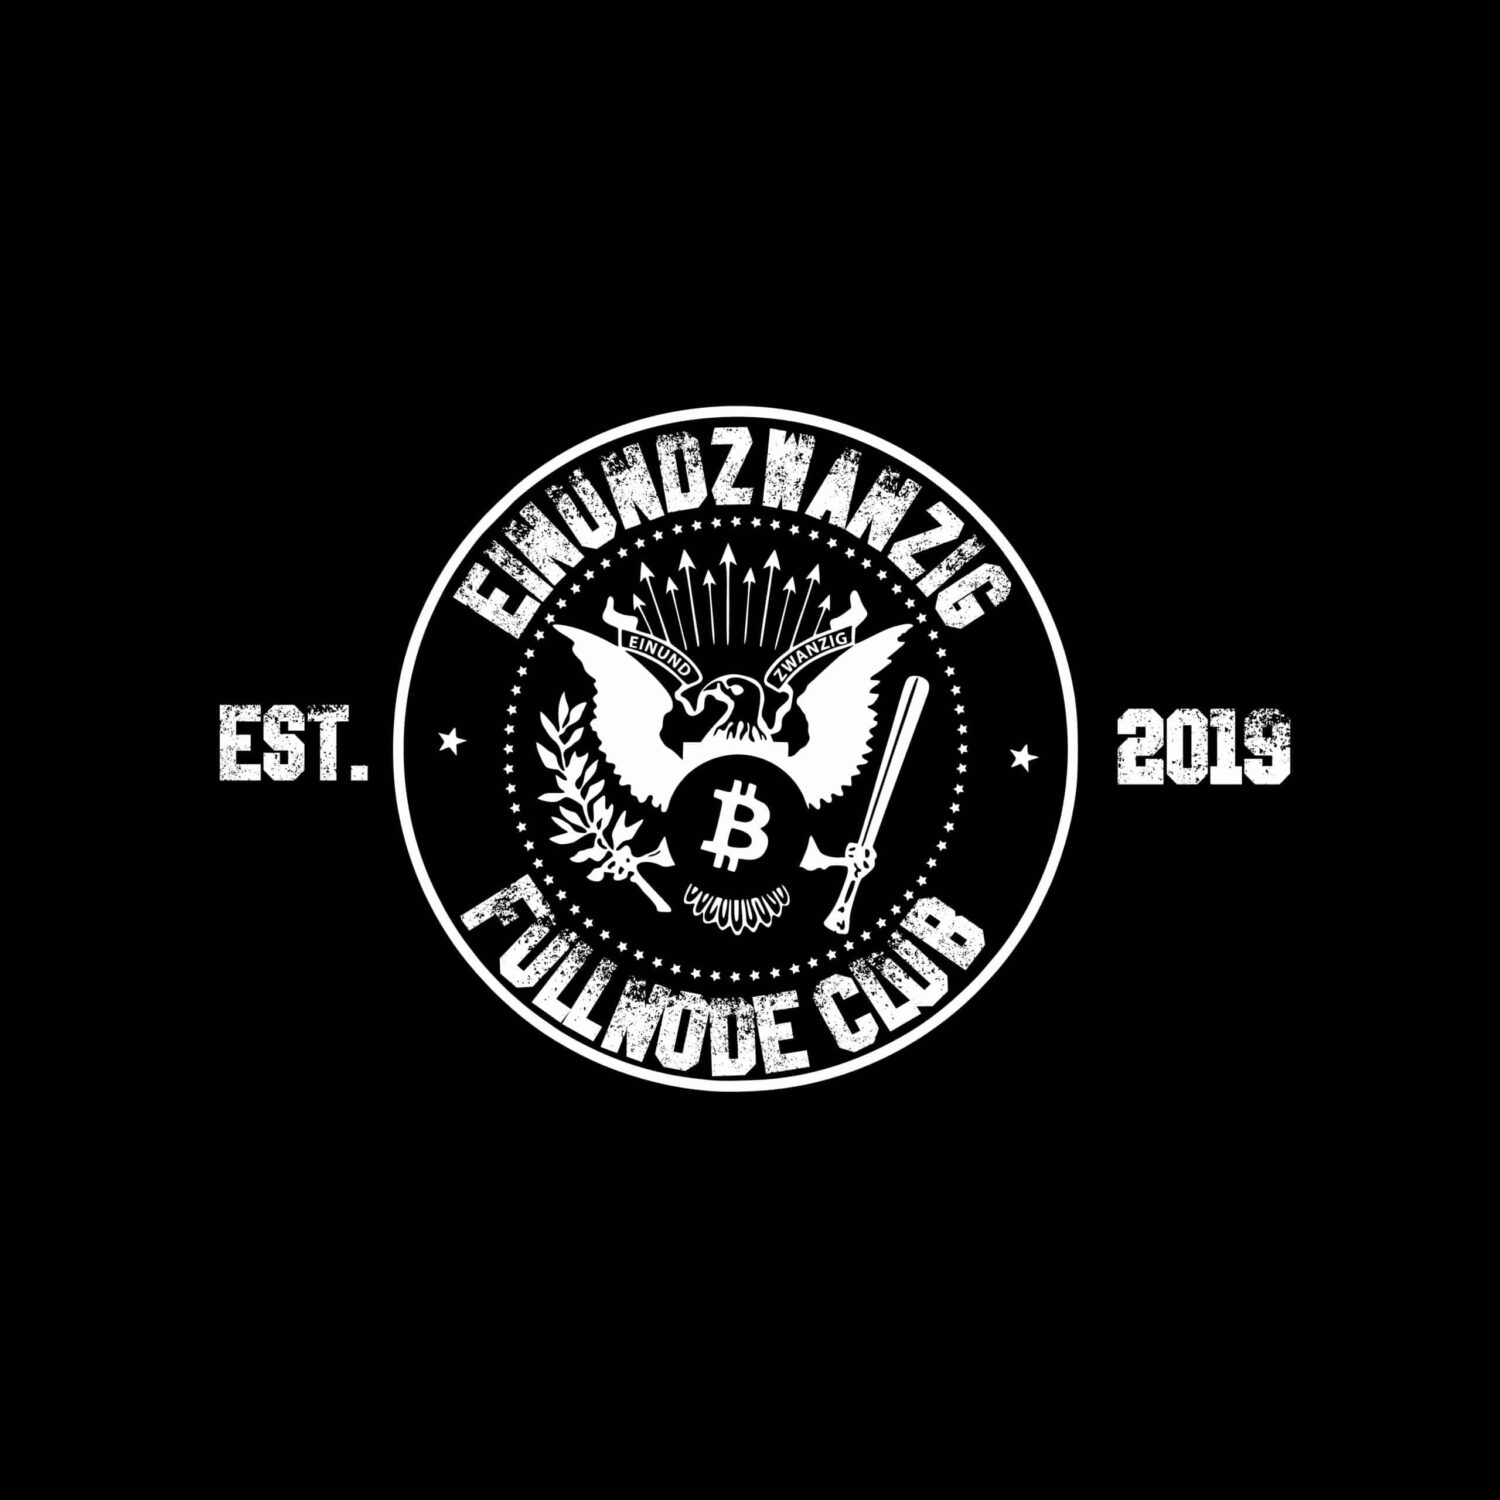 Fullnode Club Logo